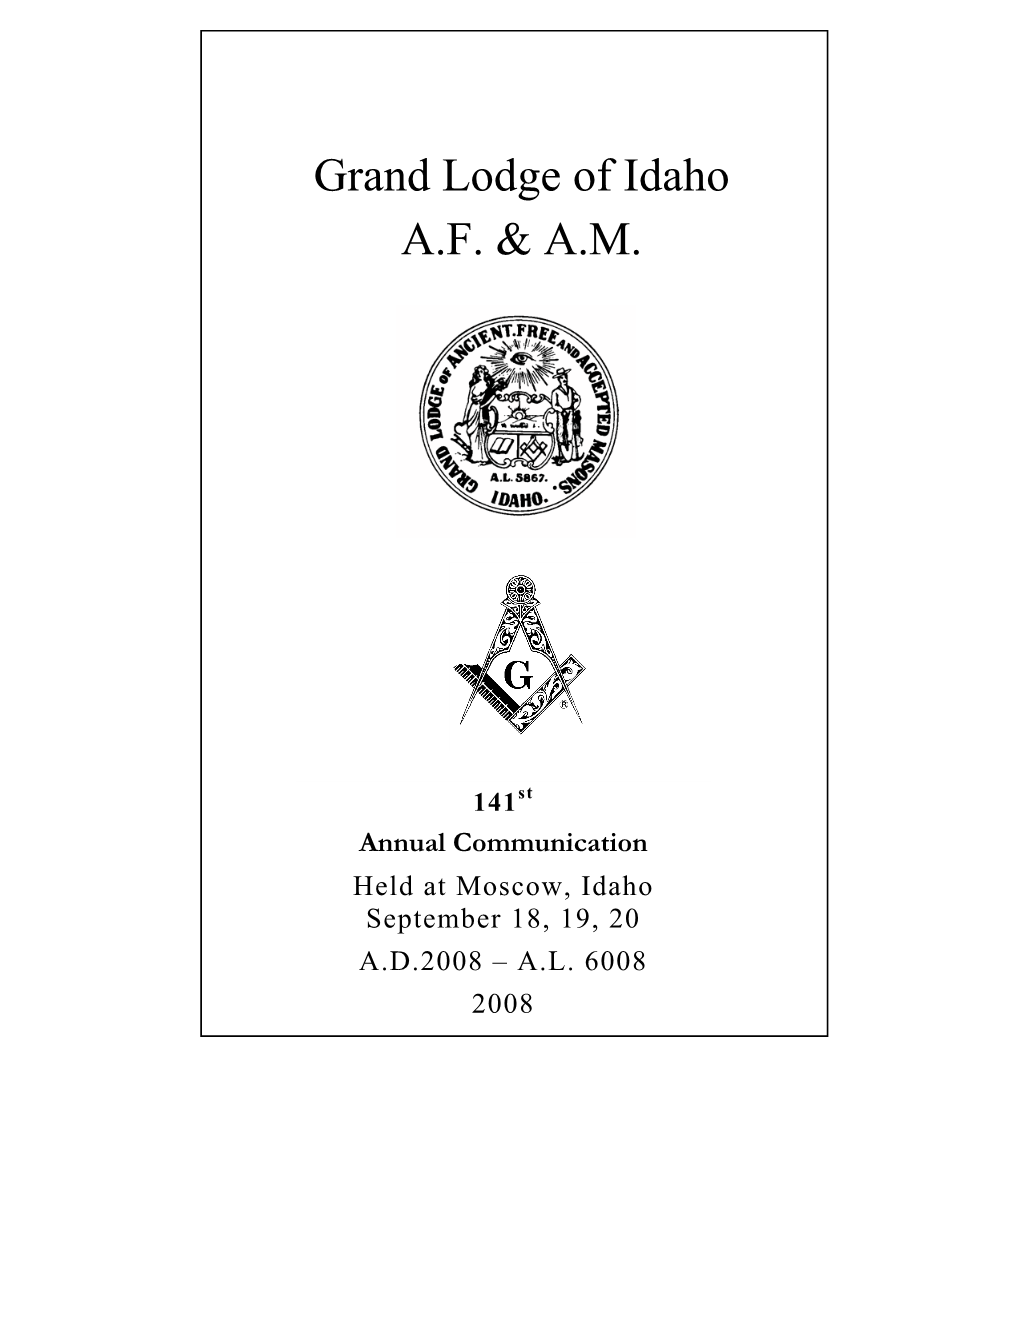 Grand Lodge of Idaho A.F. & A.M